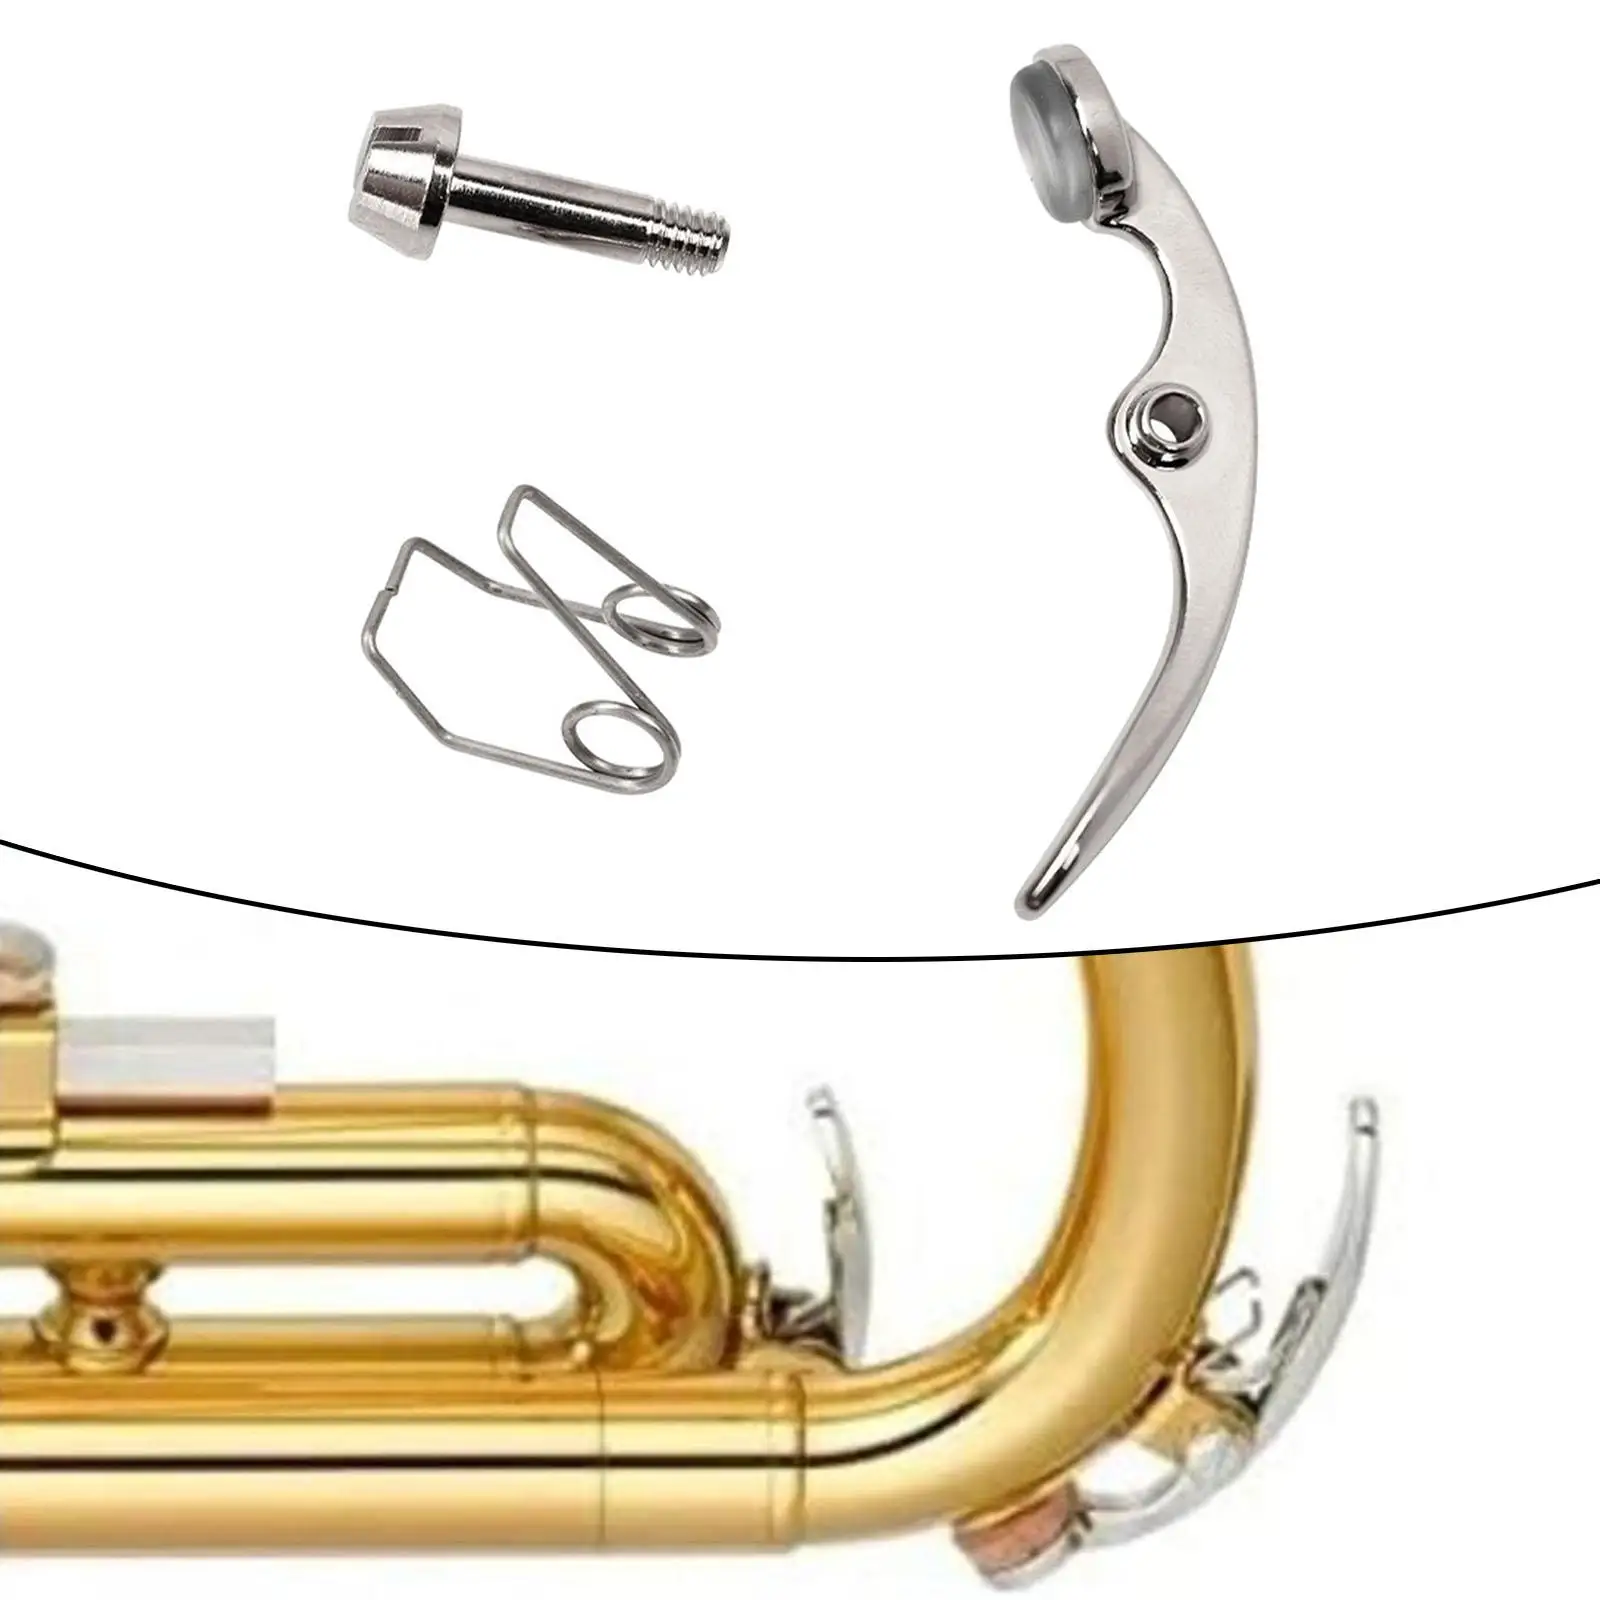 Trumpet Water Keys Valve Portable Accessories Replacement Parts for Wind Instrument Brass Instrument Trombone Repairing Trumpet